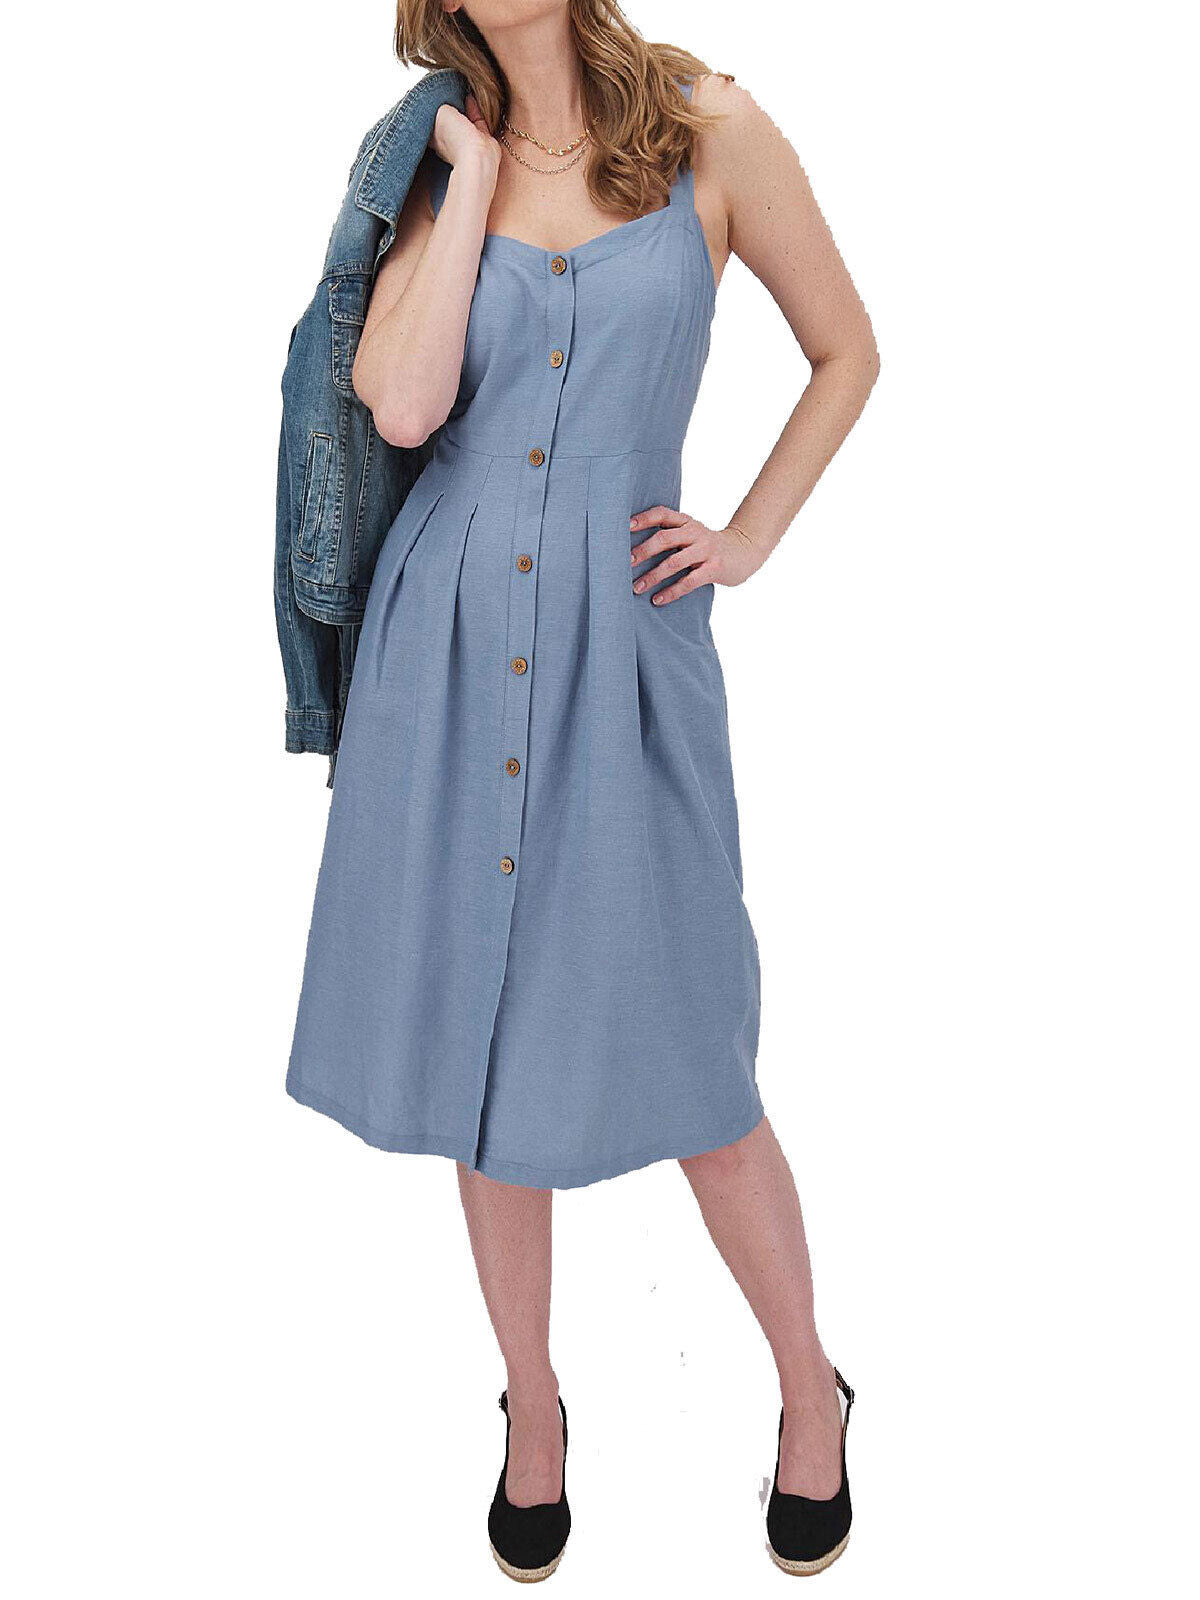 Joe Browns Blue Fabulous New Linen Mix Dress in Sizes 22 or 24